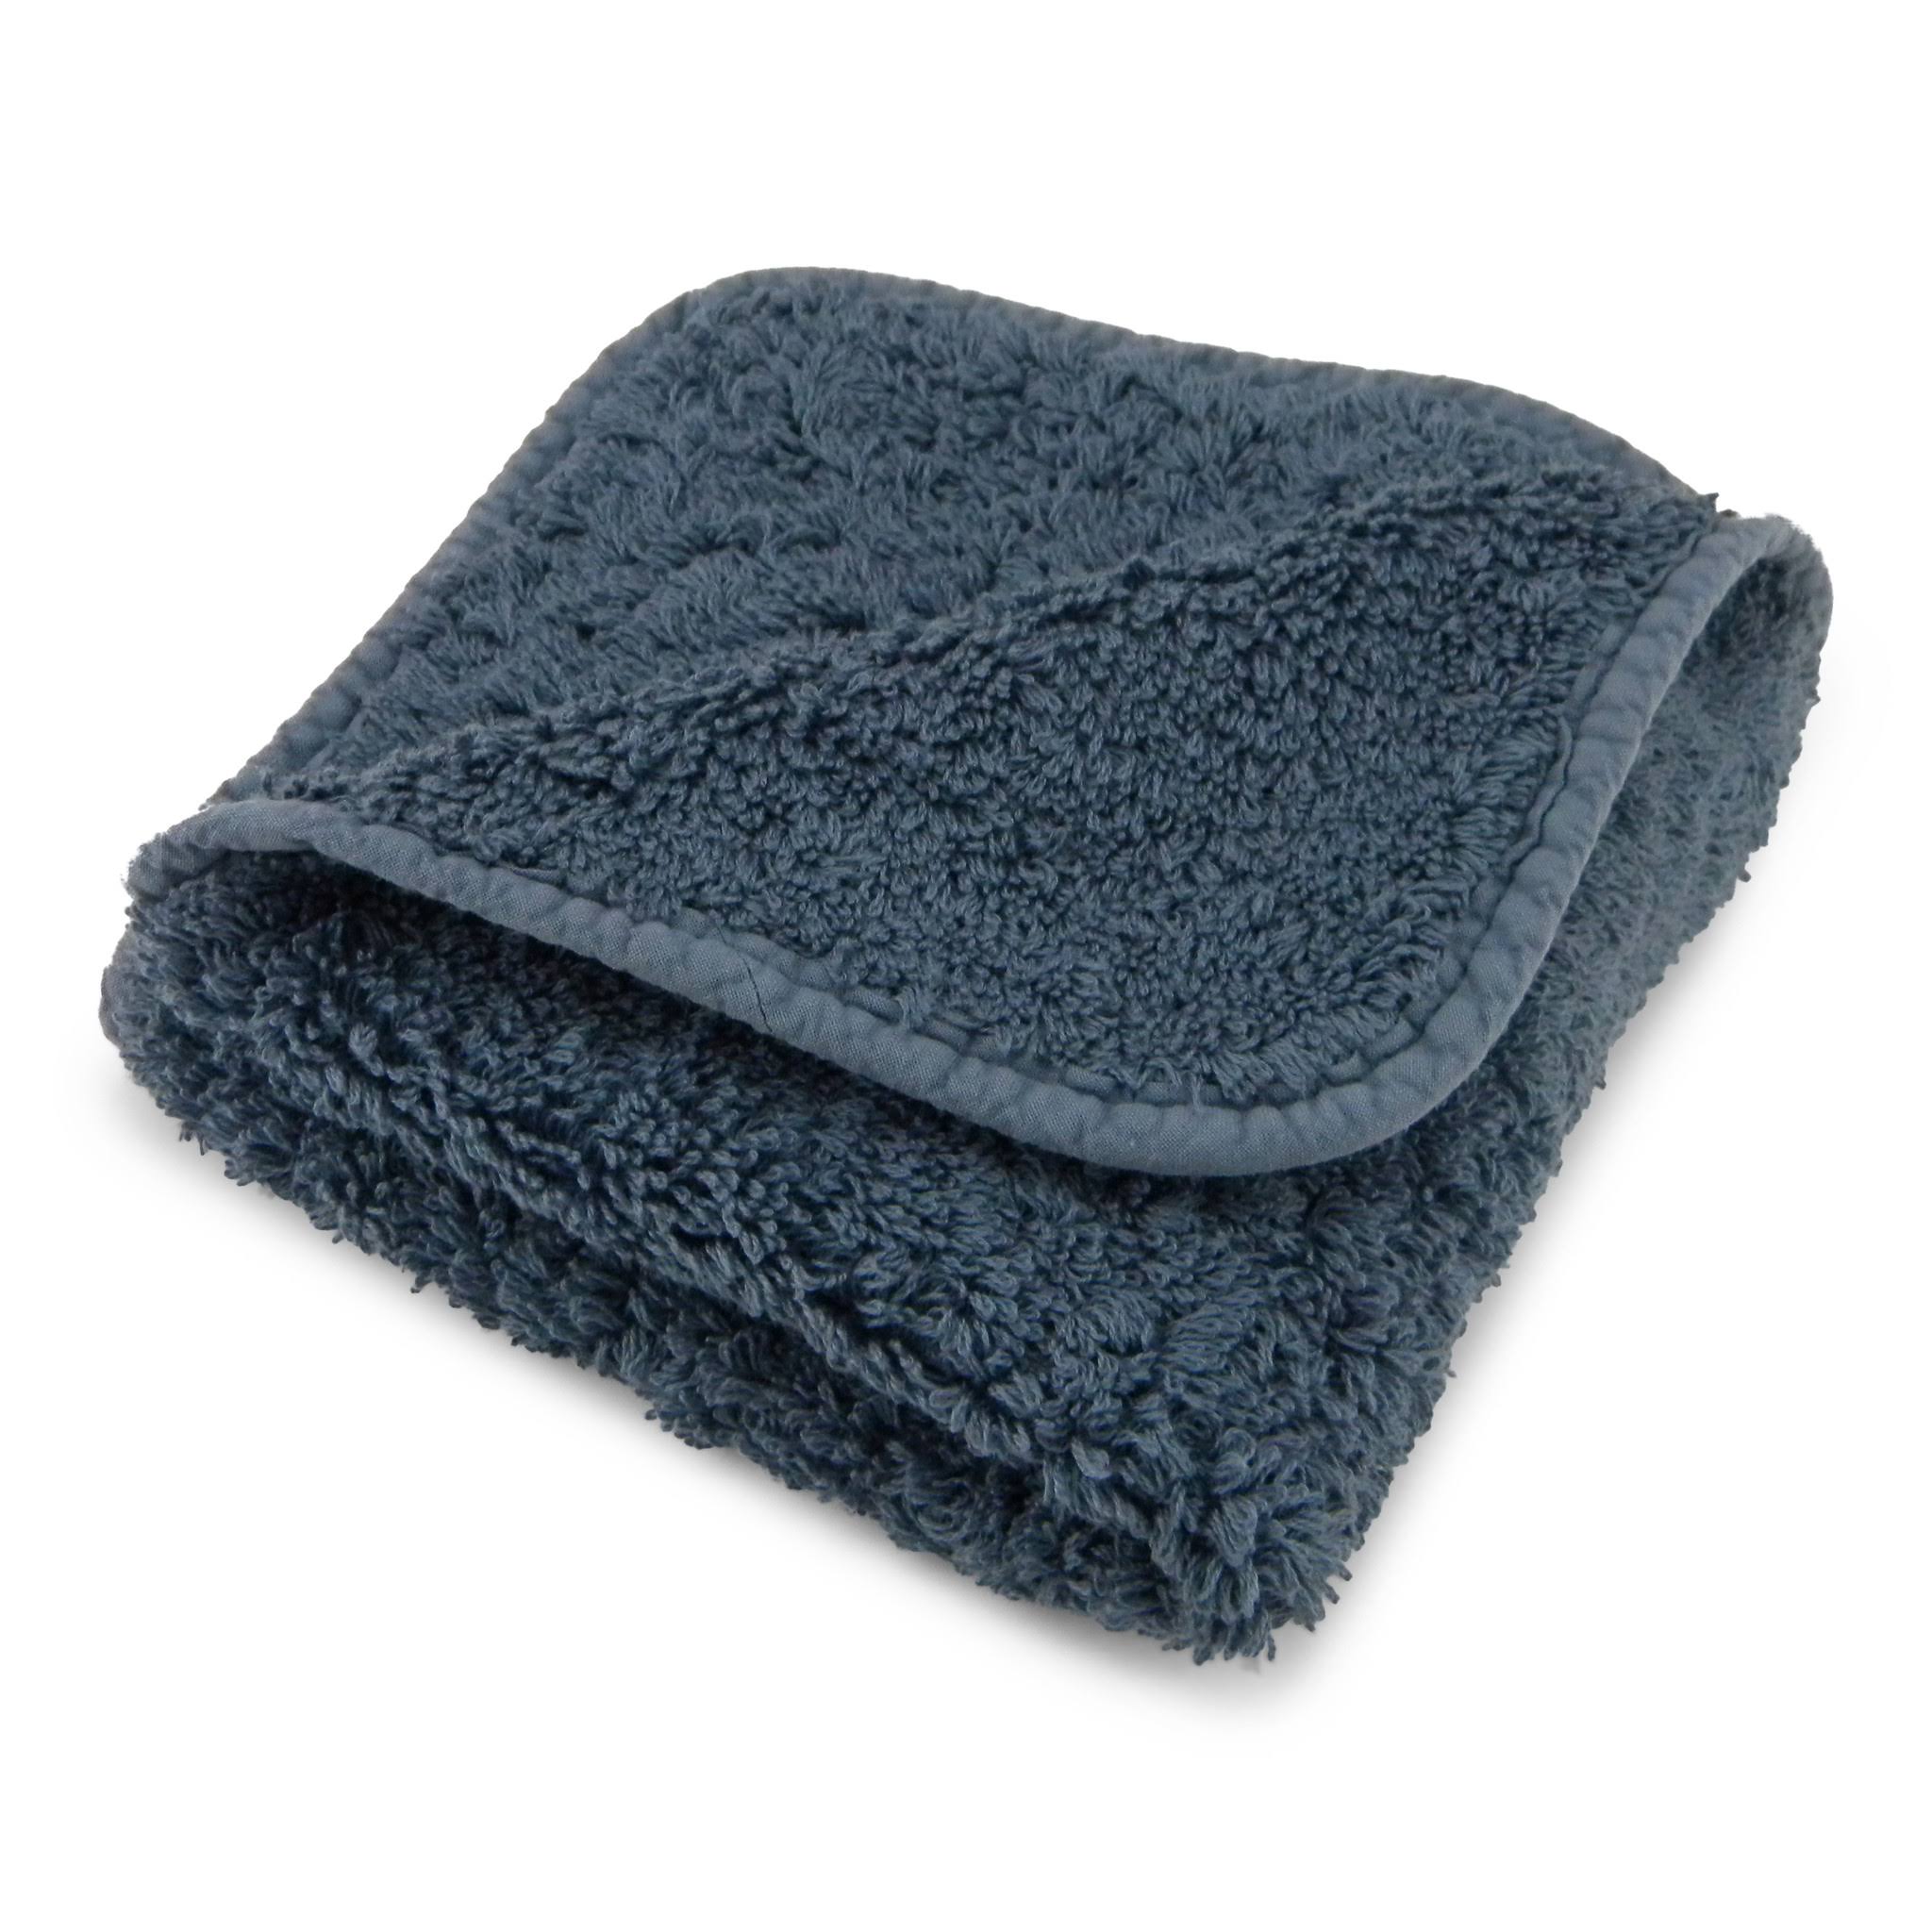 Abyss Super Pile Towels - Hand Towel 17x30" Denim 307